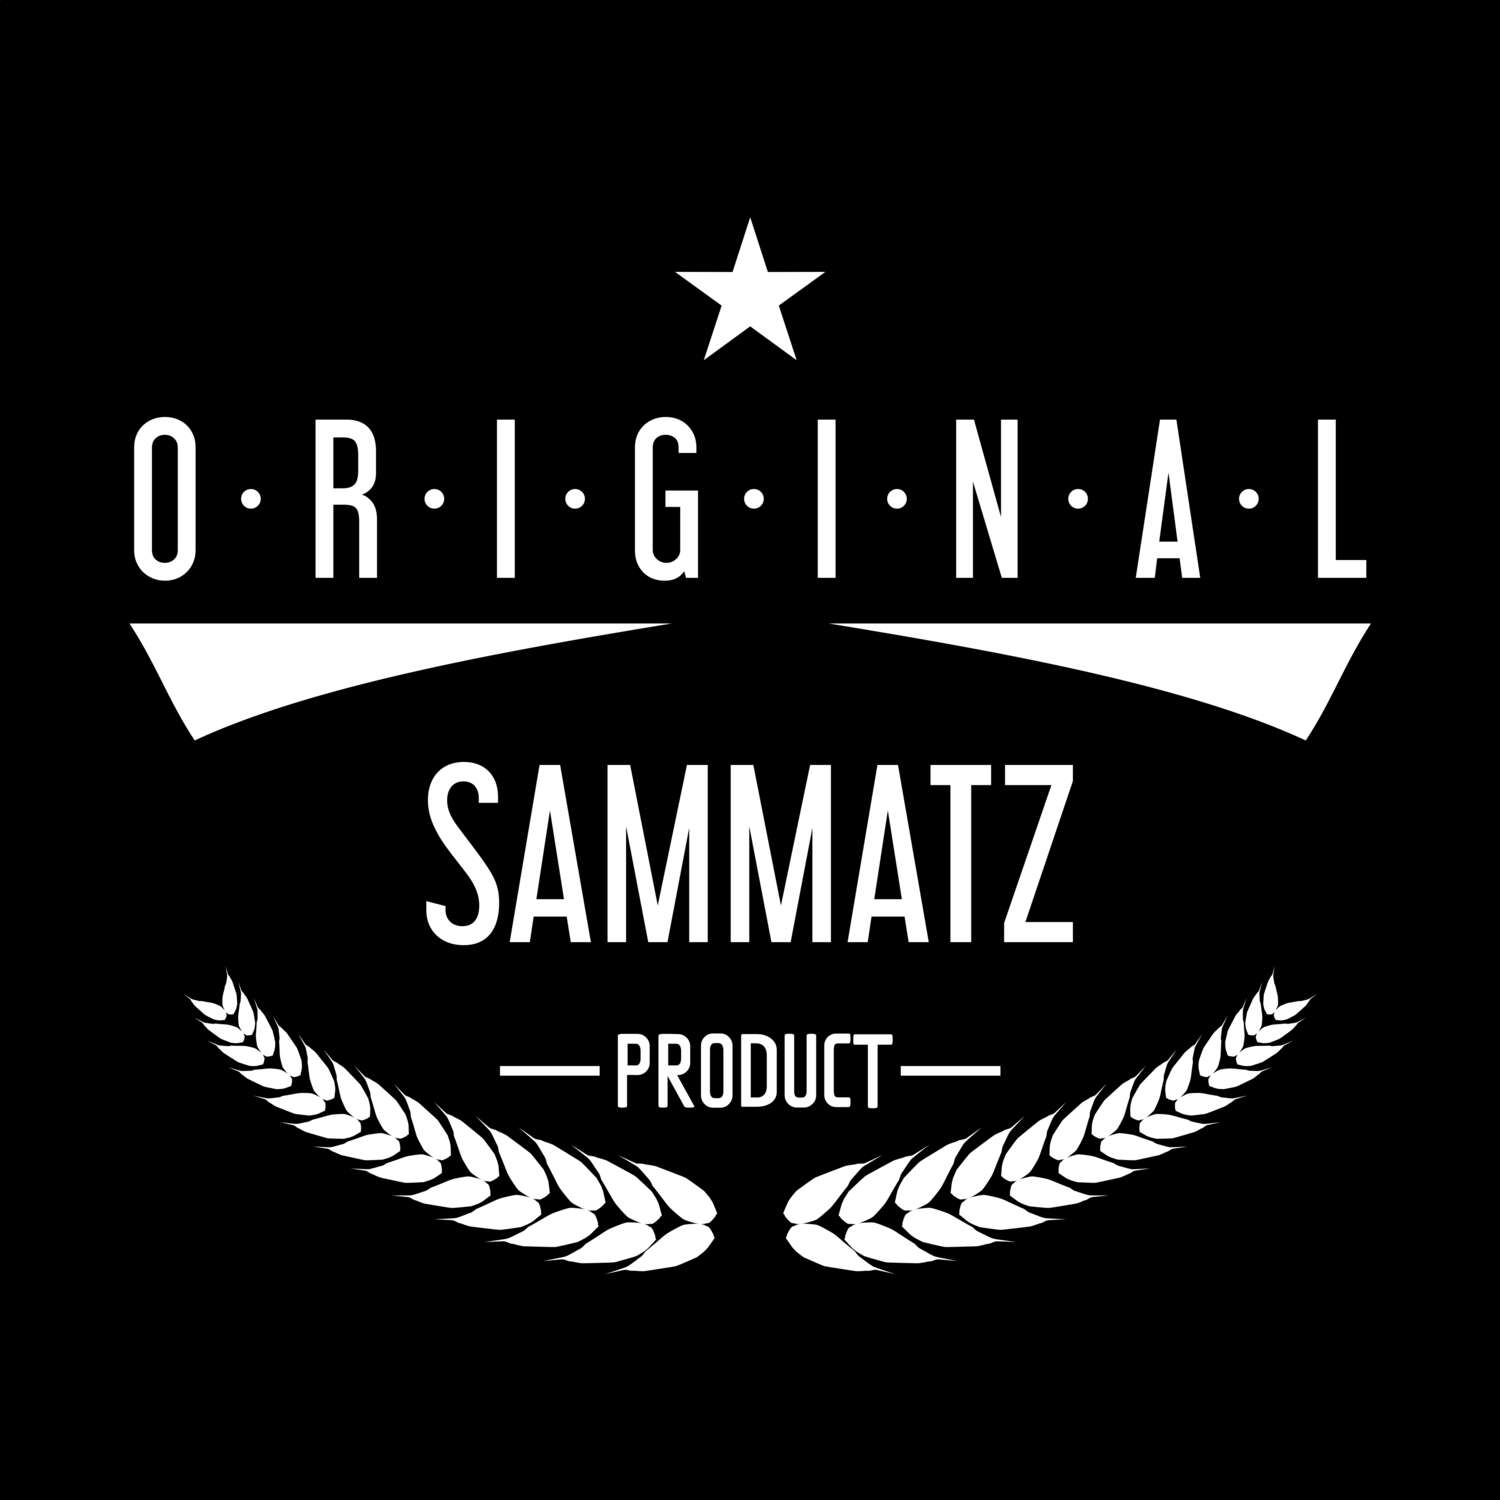 Sammatz T-Shirt »Original Product«